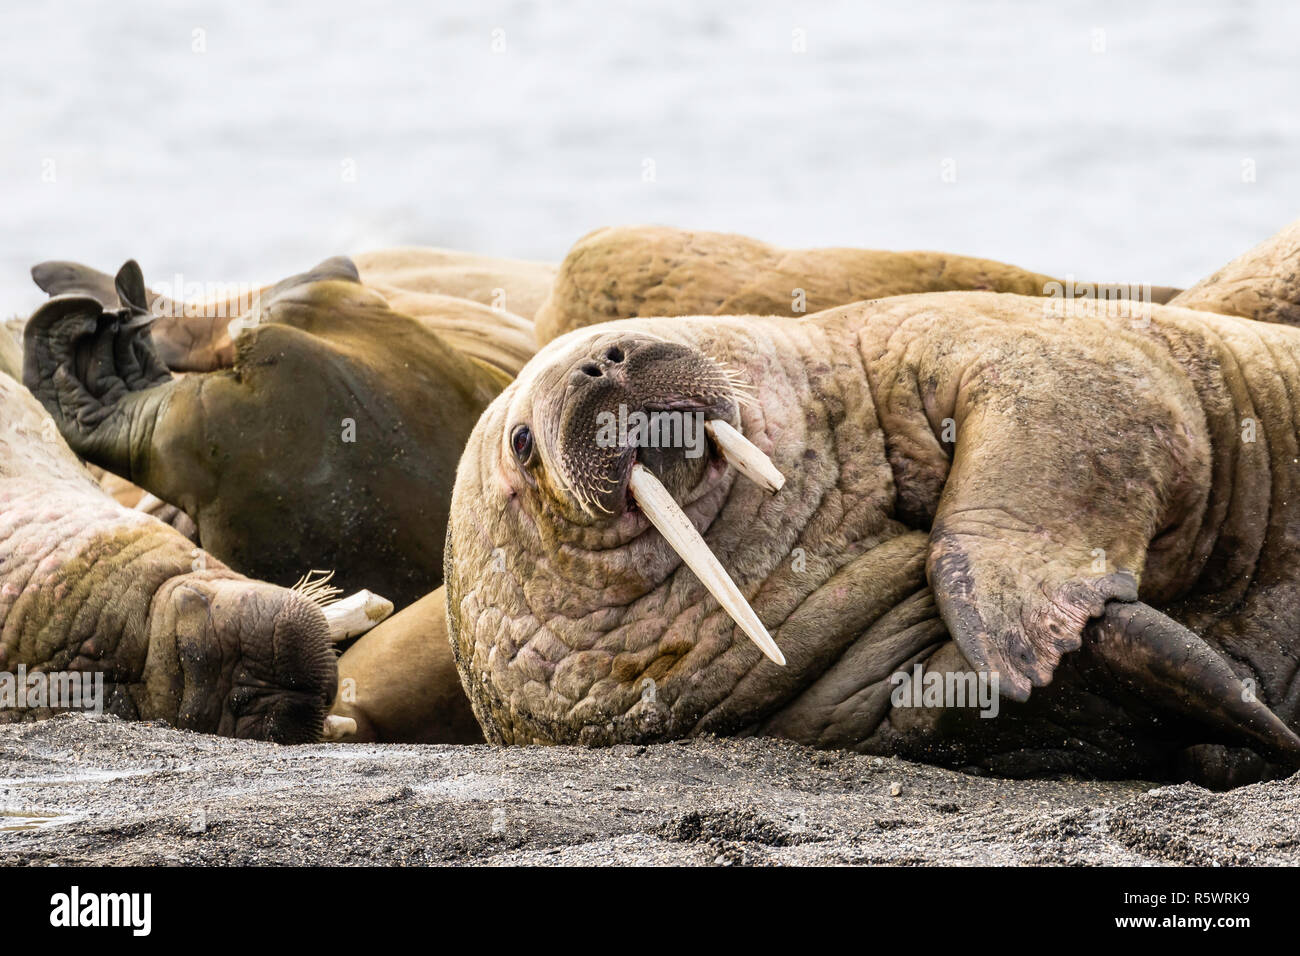 Atlantic walrus sunning on beach, Odobenus rosmarus rosmarus, Kapp Lee, Edgeøya, Svalbard Archipelago, Norway. Stock Photo